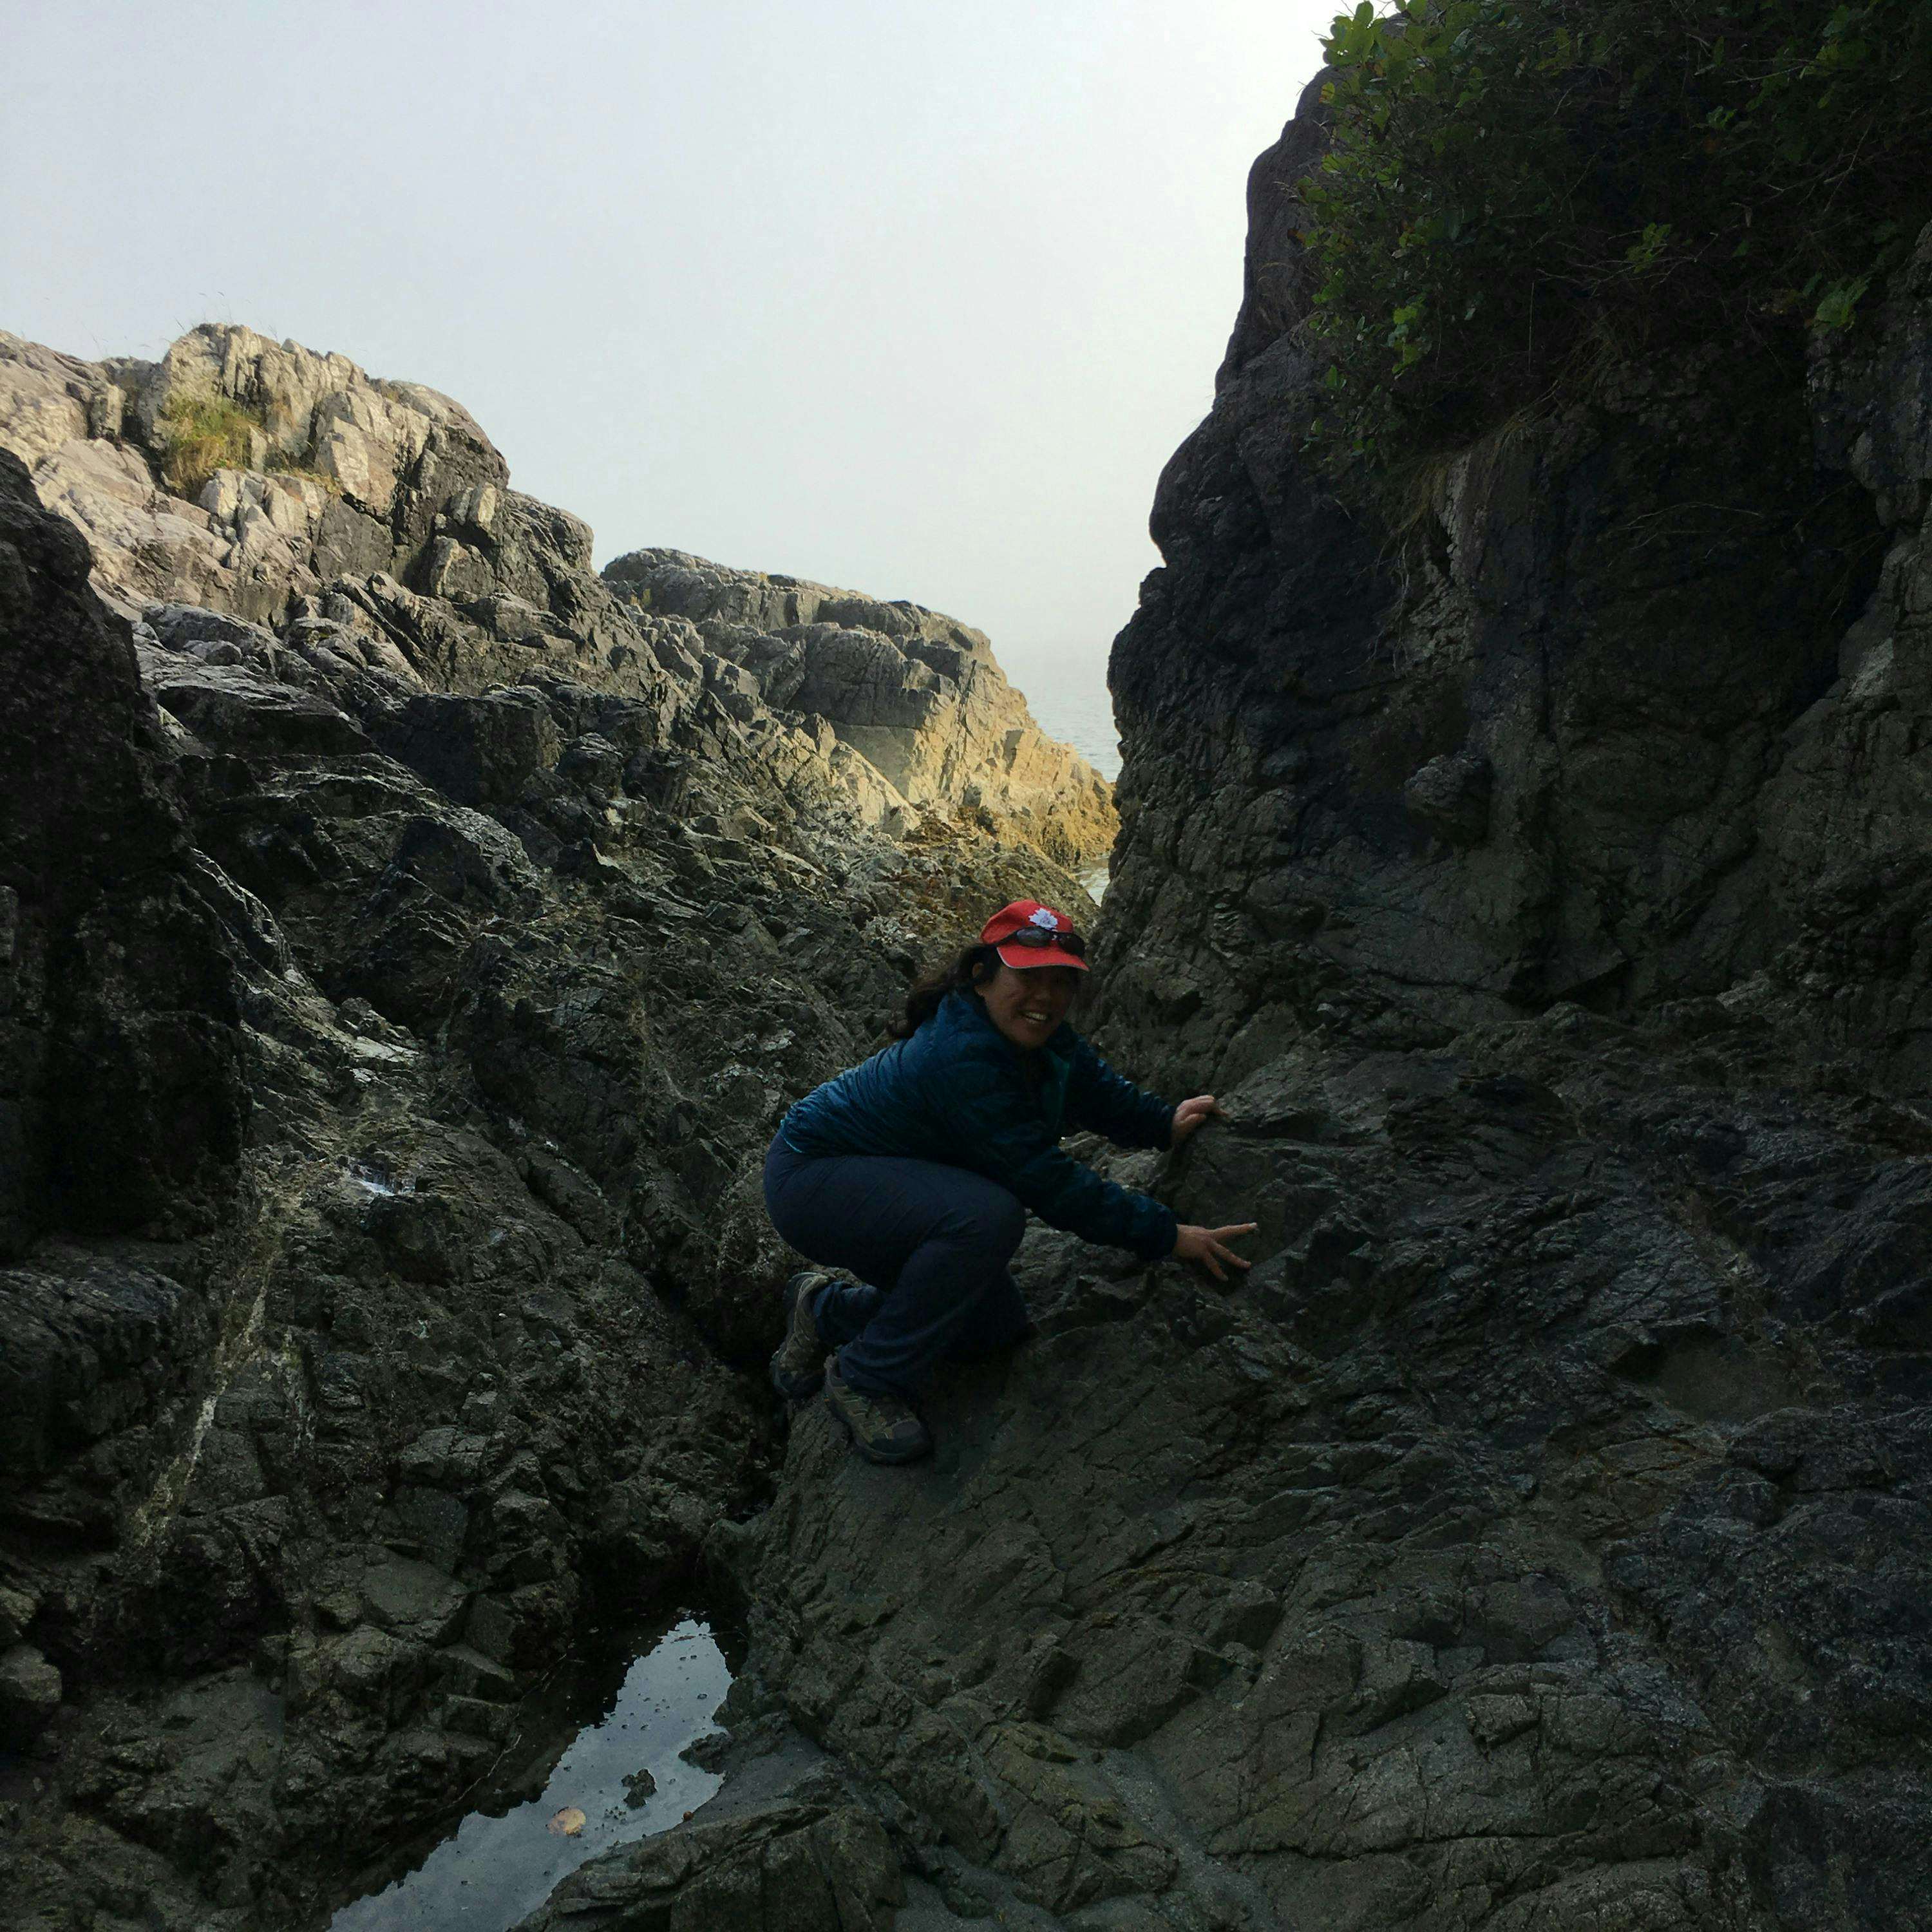 Karen Lai climbing rocks near the shore